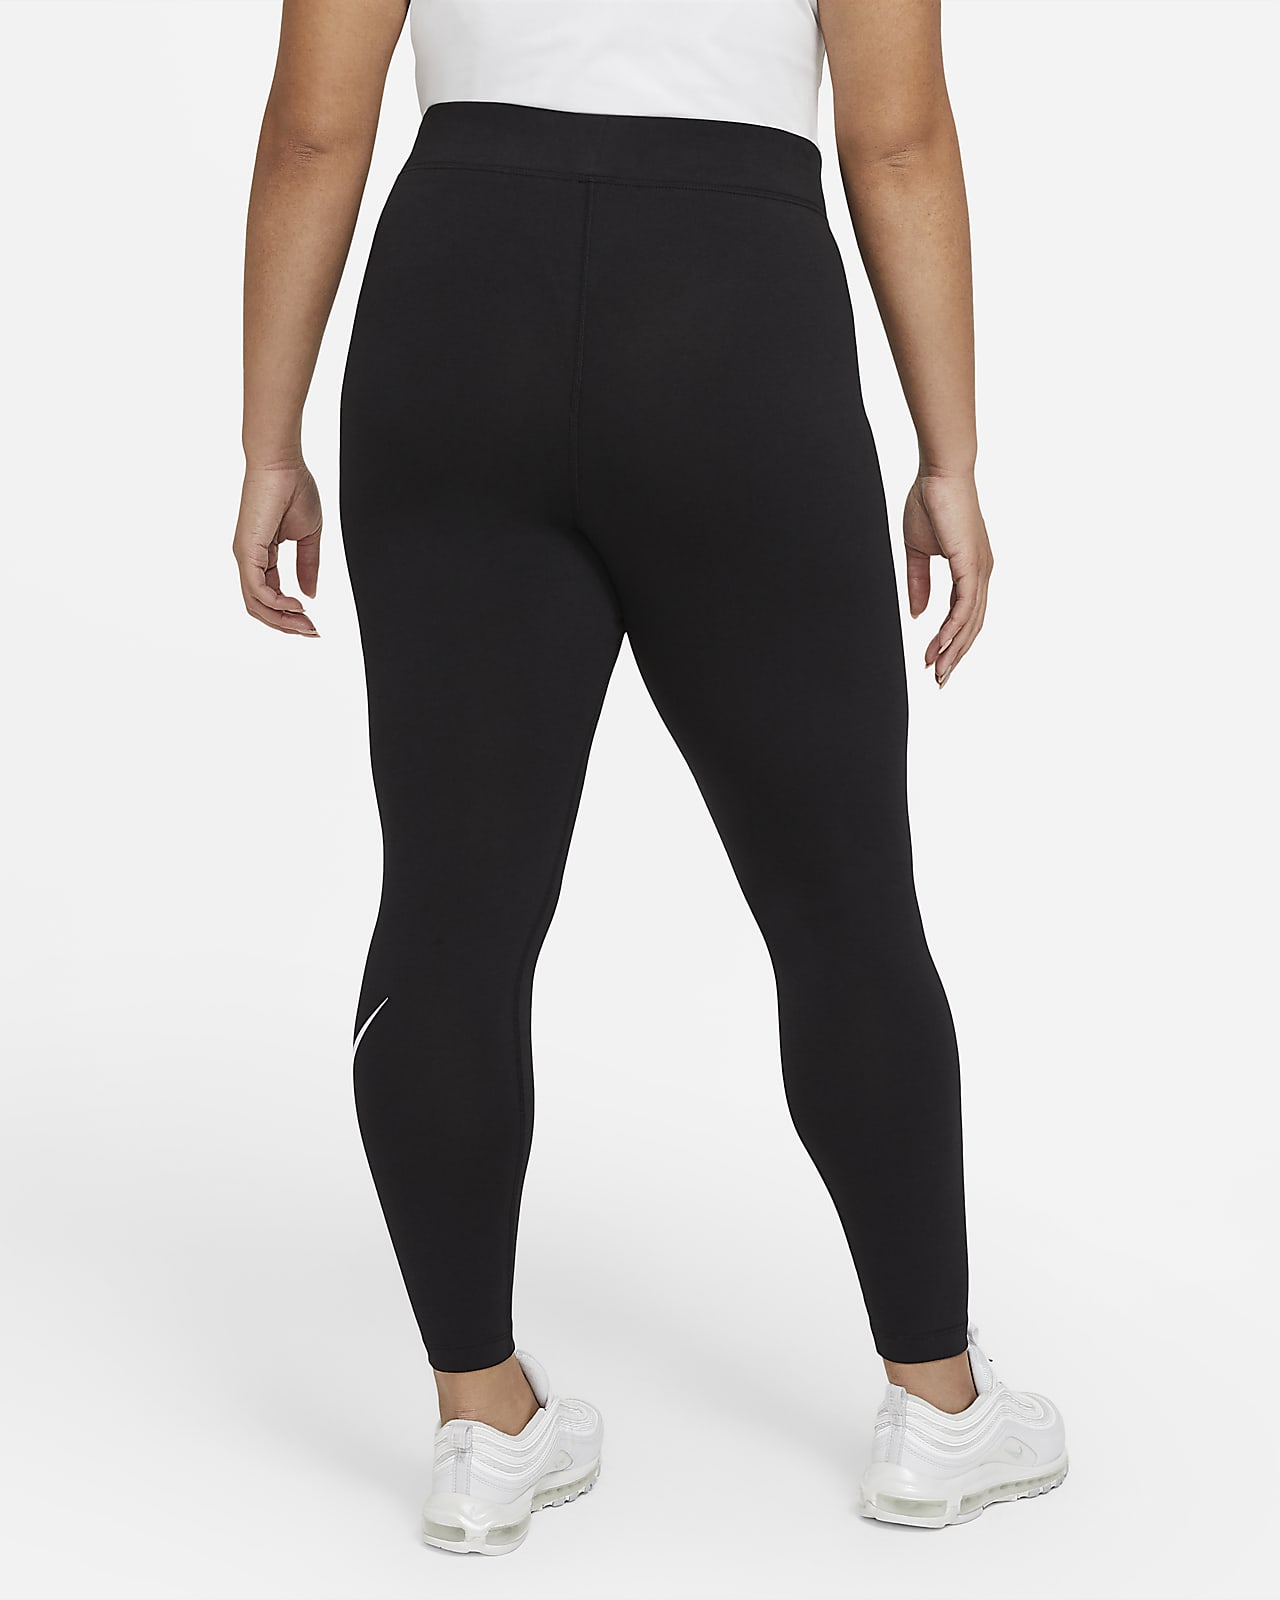 Nike Women's Black Elastic Waist Just Do It Compression Leggings Size XL | Compression  leggings, Nike women, Leggings fashion